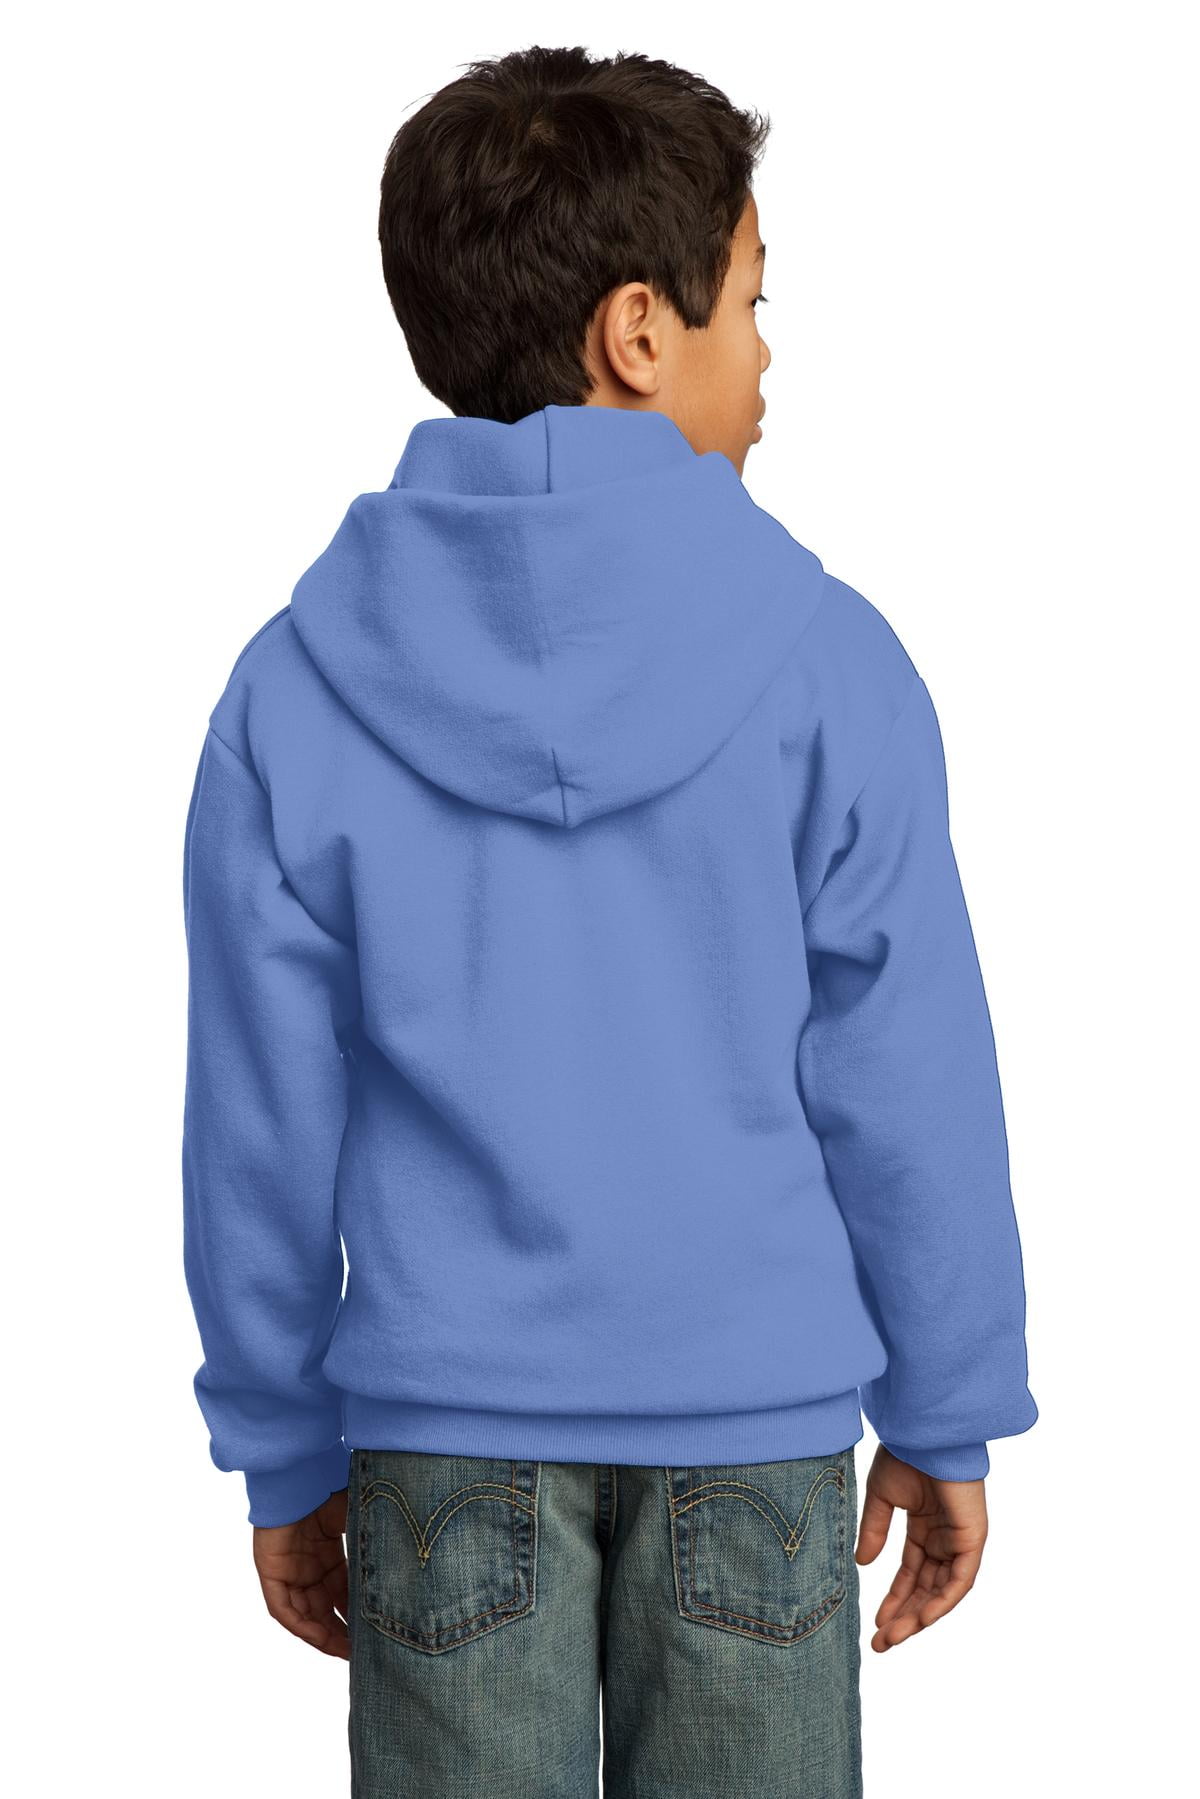 Port & Company Youth Core Blue) Fleece Pullover Hooded (Carolina Sweatshirt-L